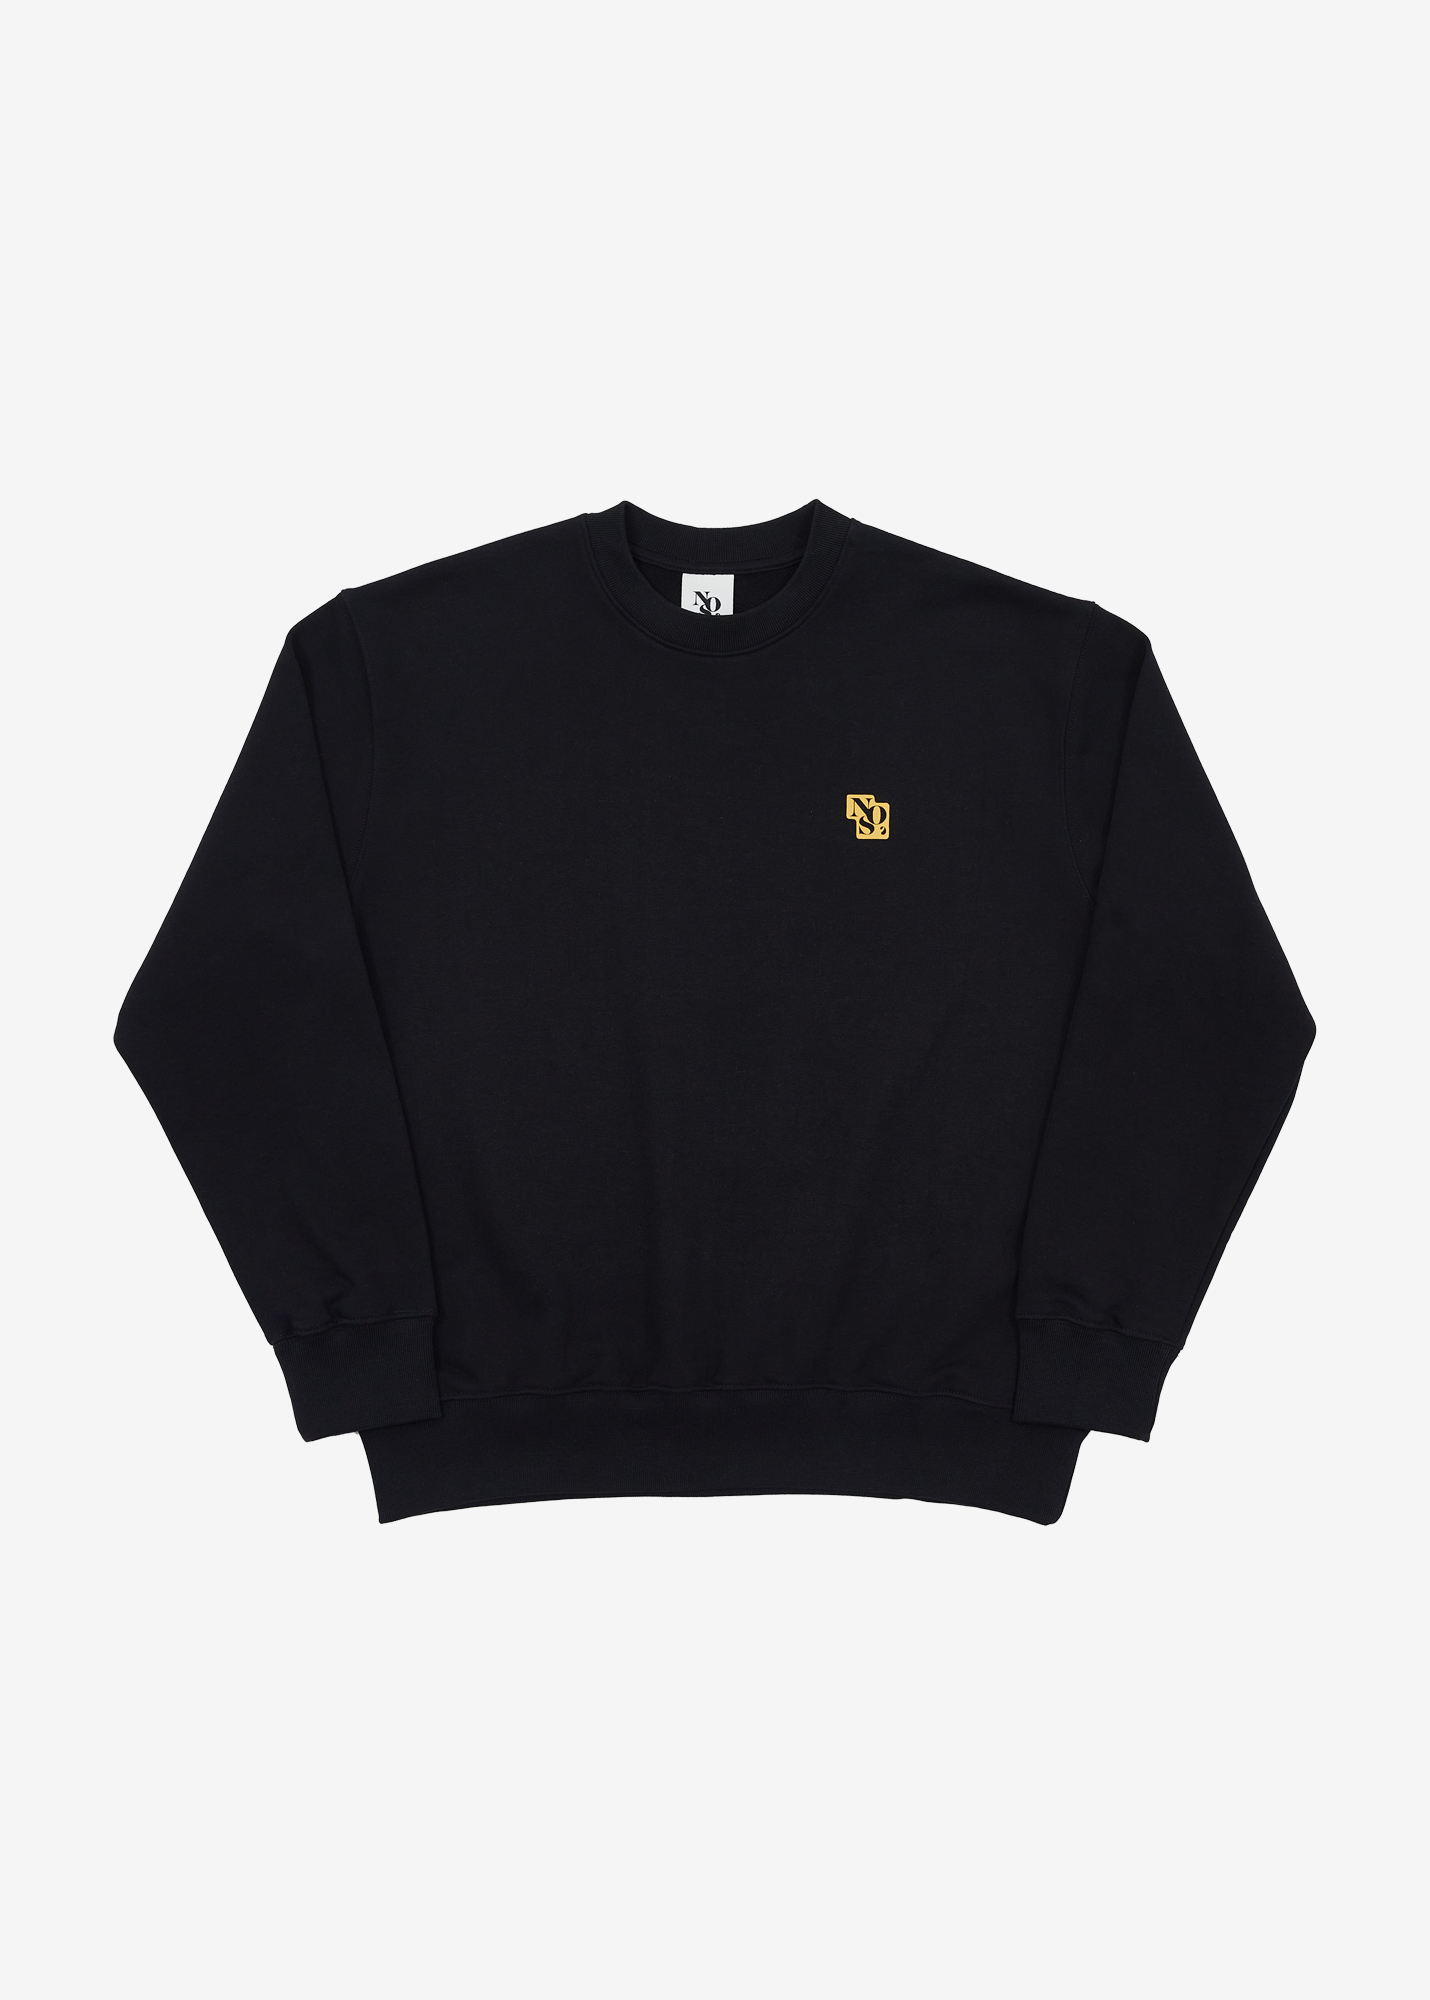 Quadrangle logo sweatshirt - Black